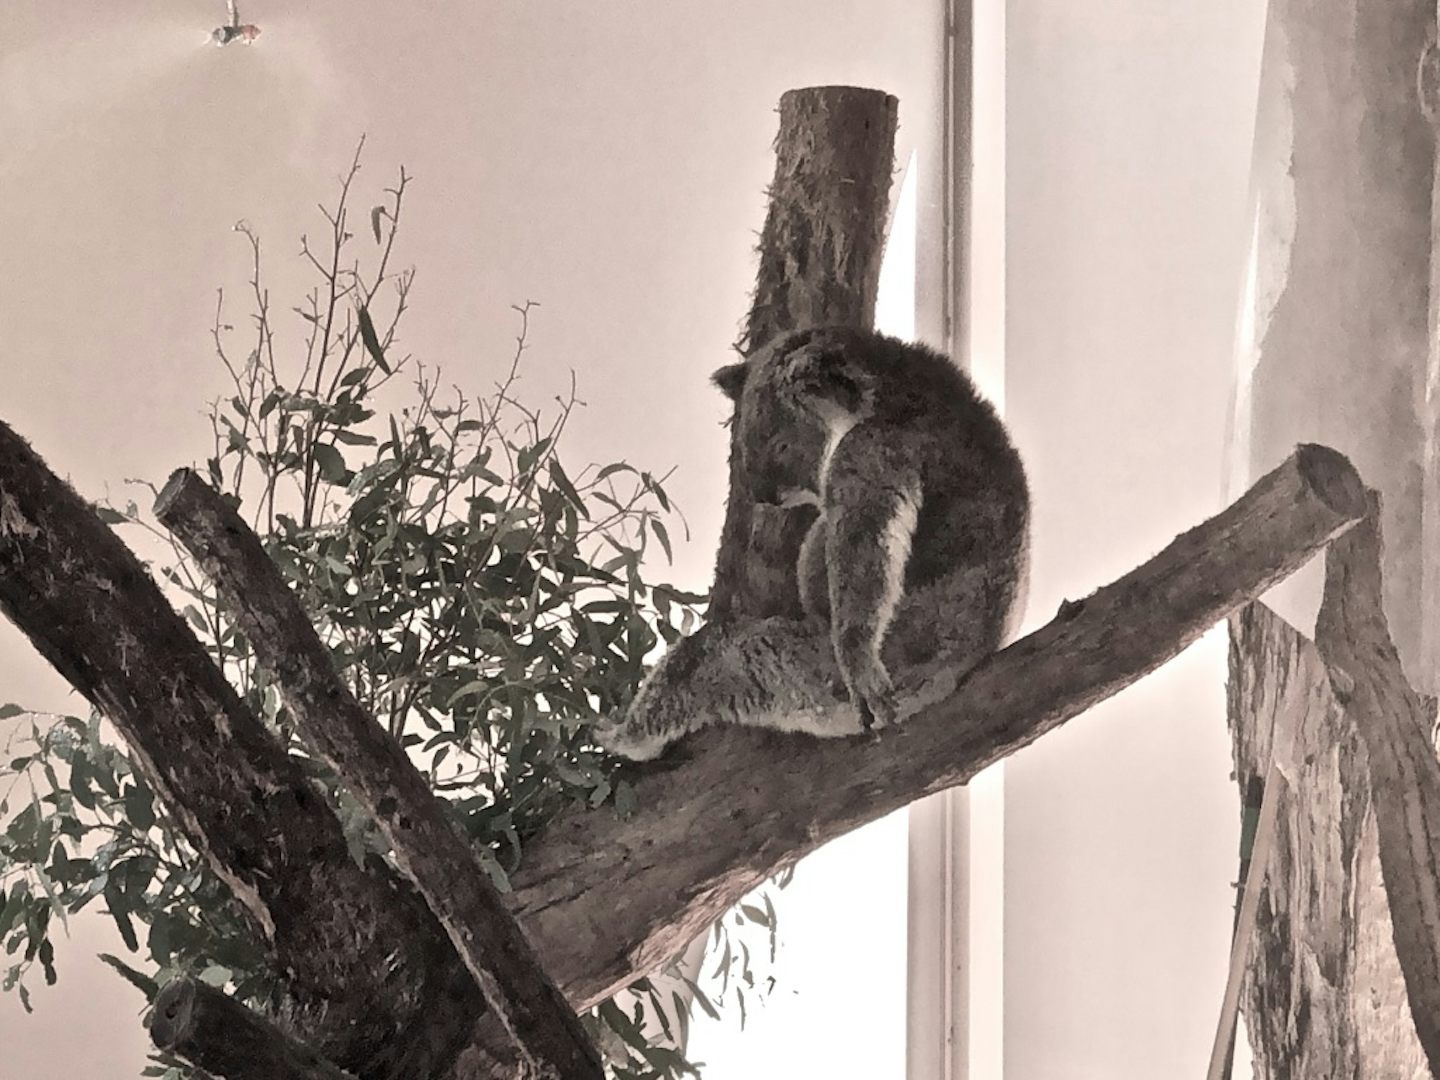 Koala at the Cleland Wildlife Conservation Park 